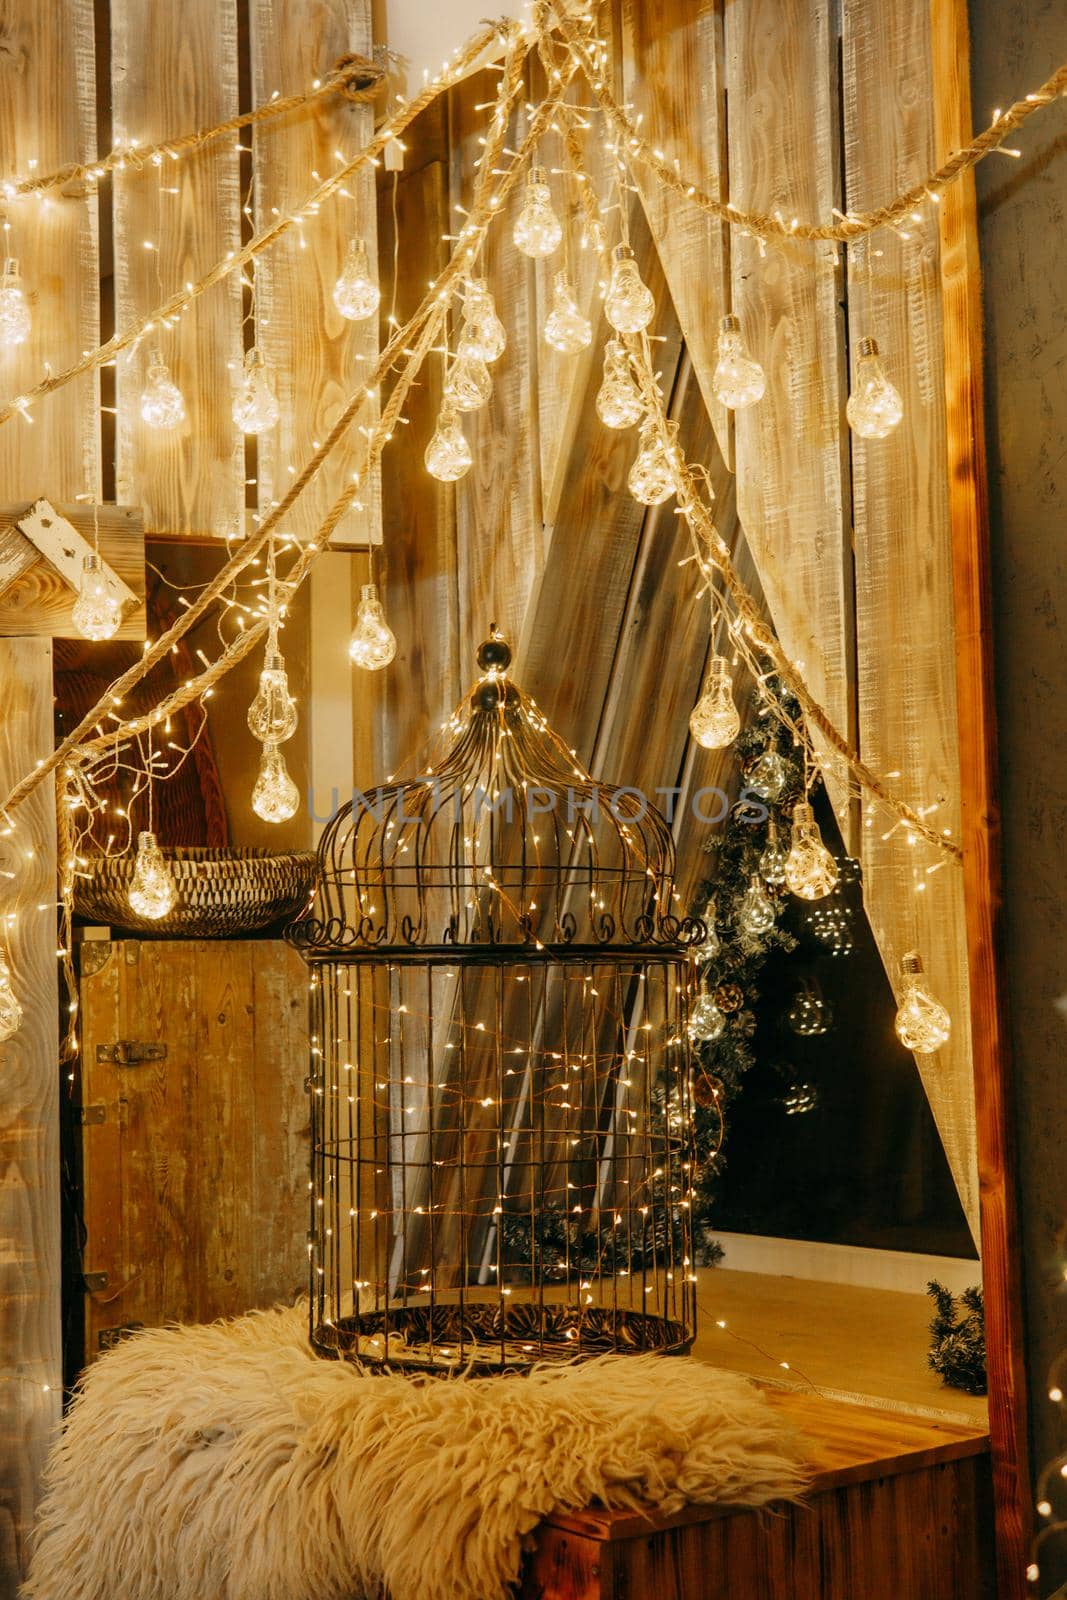 Luminous garland in the Christmas interior